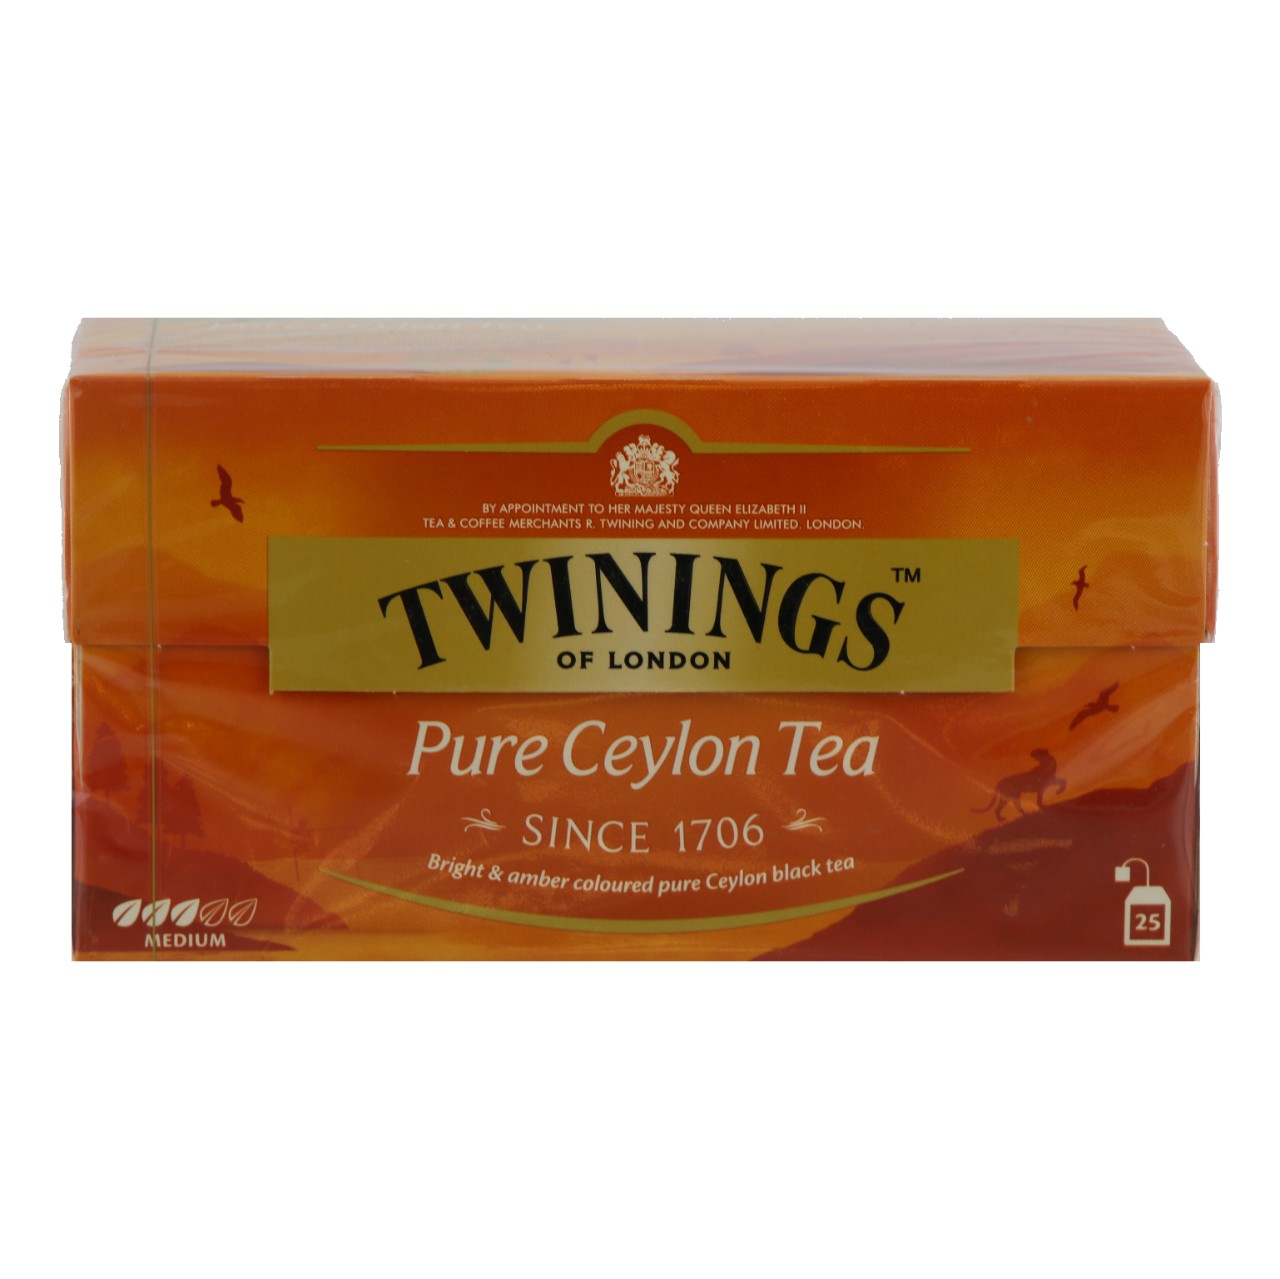 Ceylon orange pekoe tea